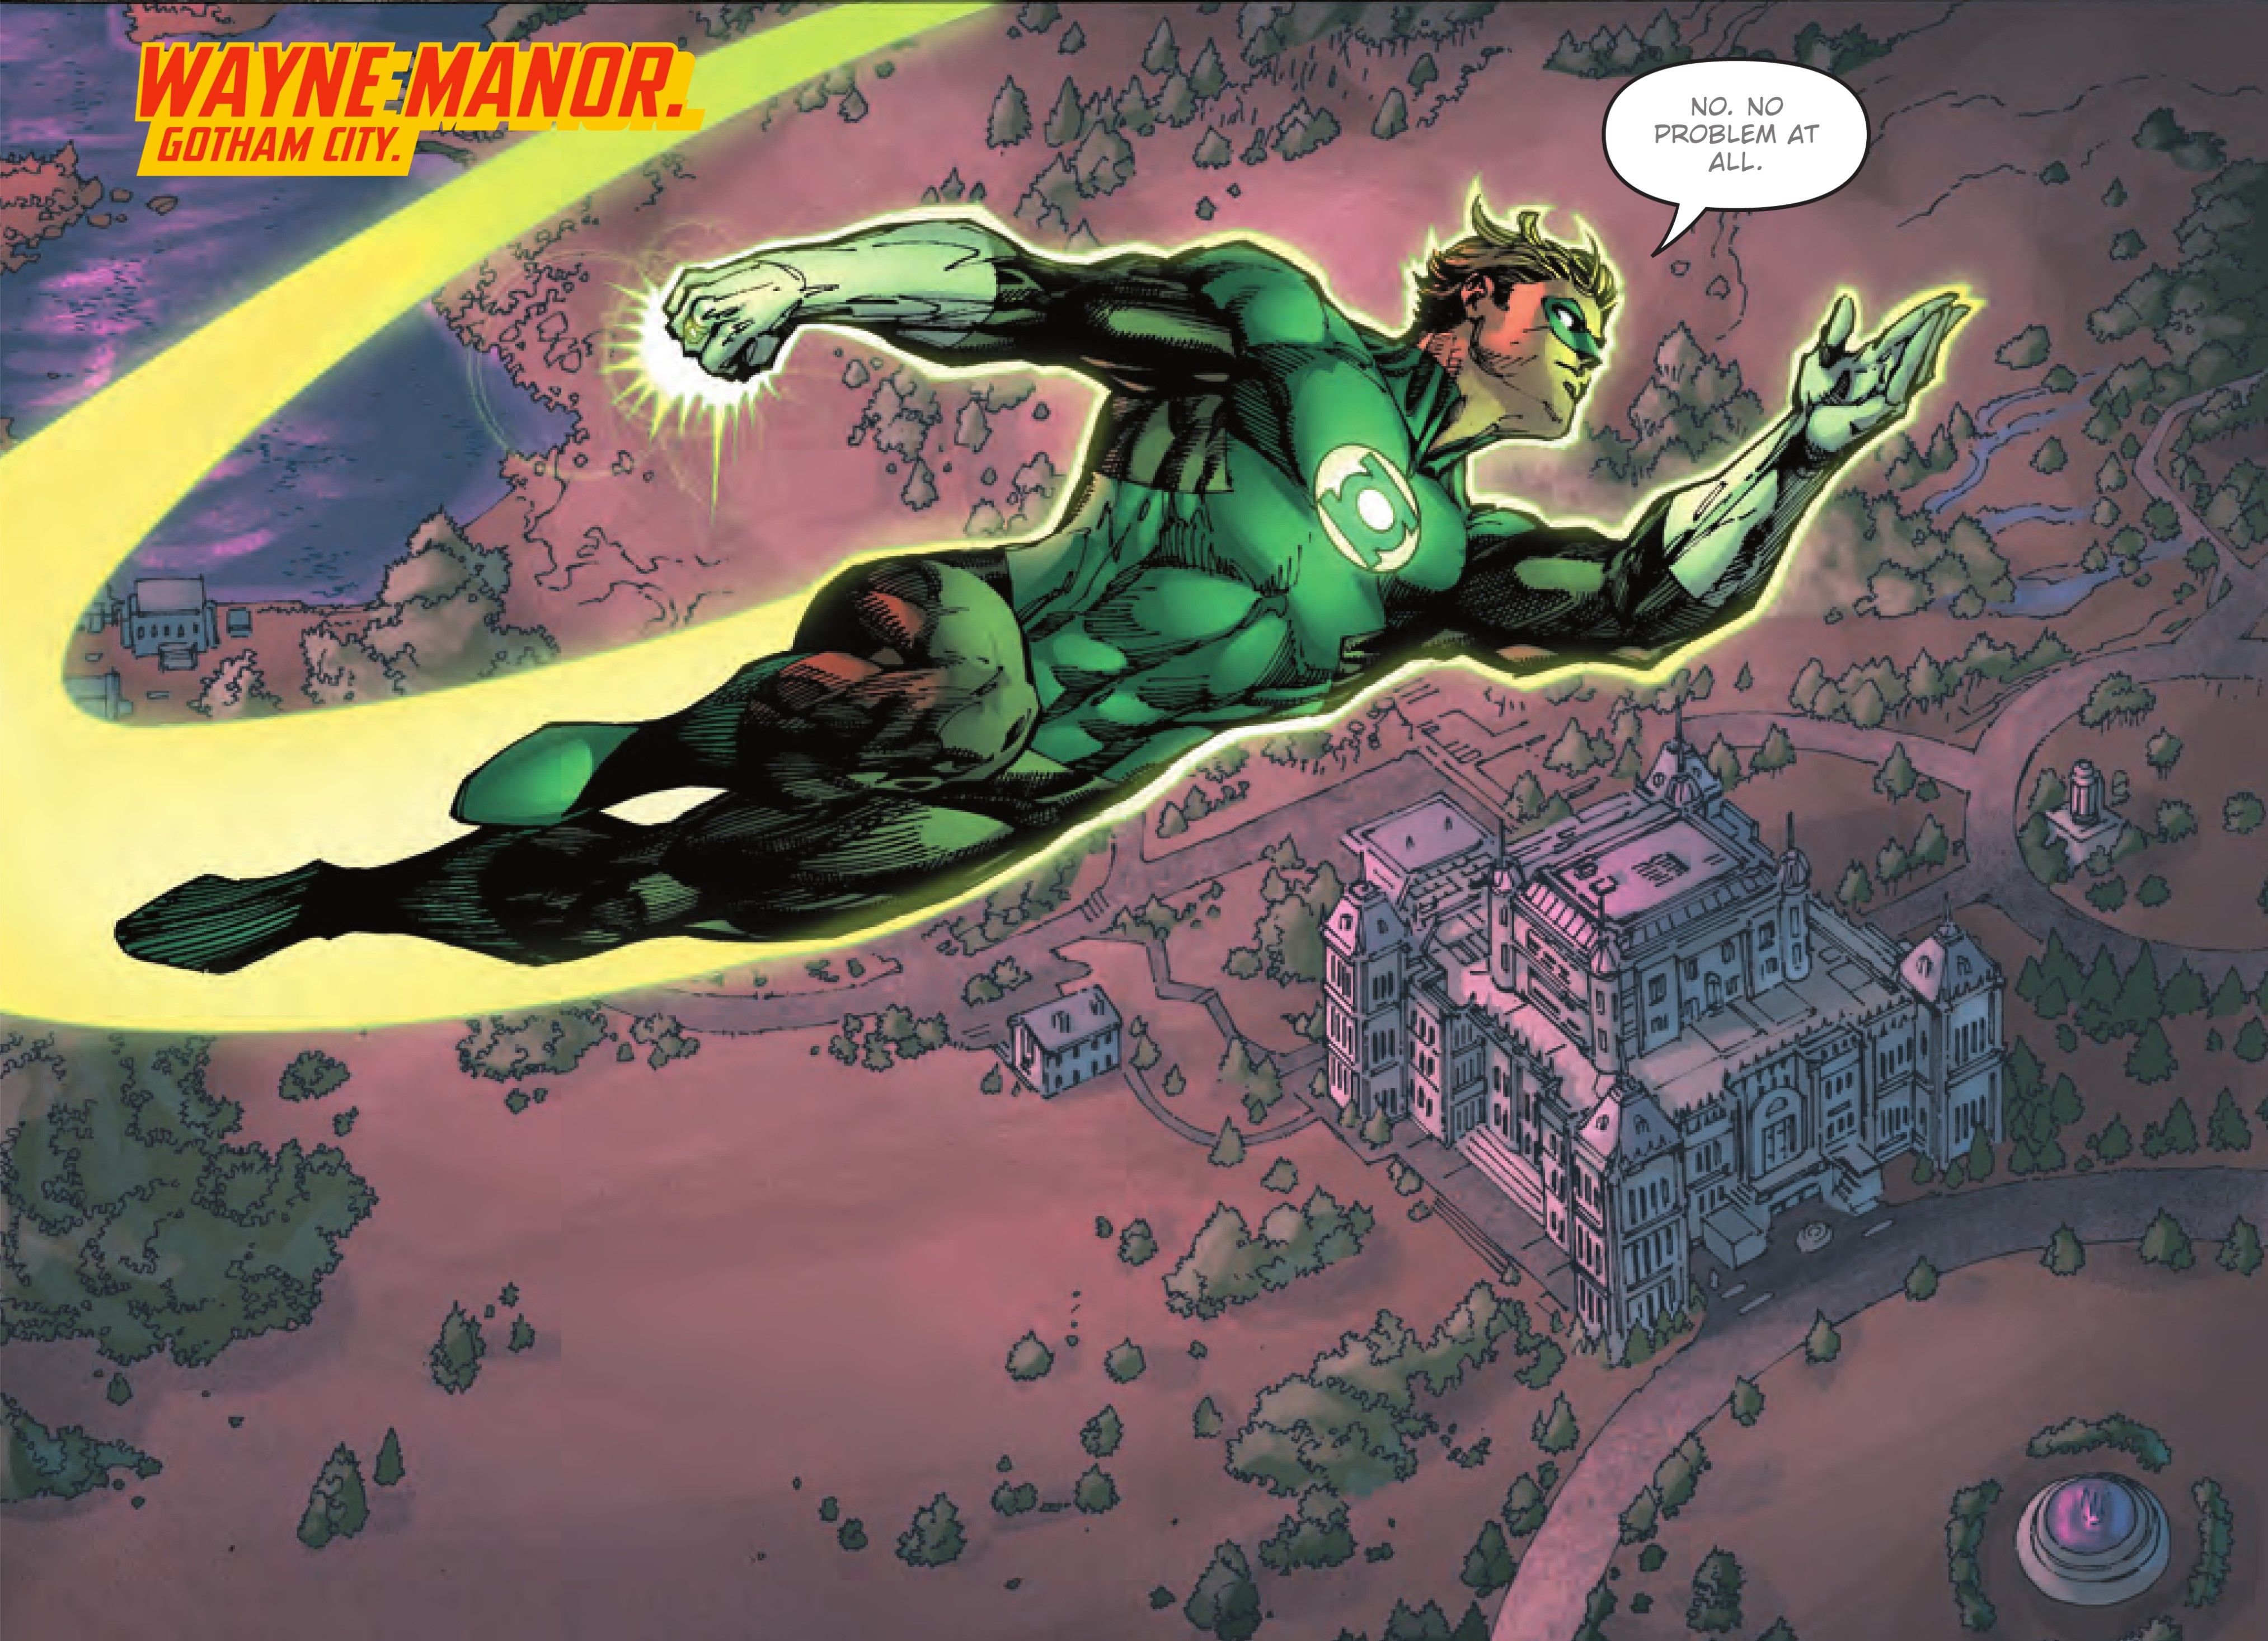 Green Lantern over Wayne Manor